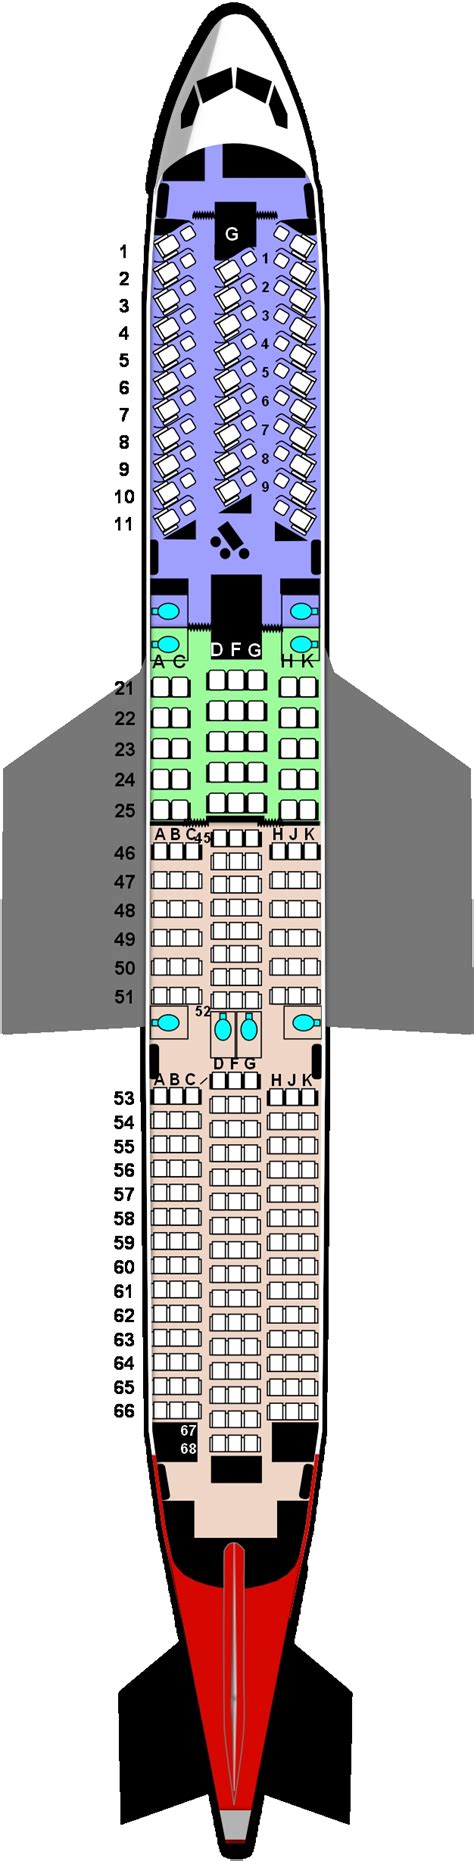 United Boeing 787 9 Seat Map Sexiz Pix